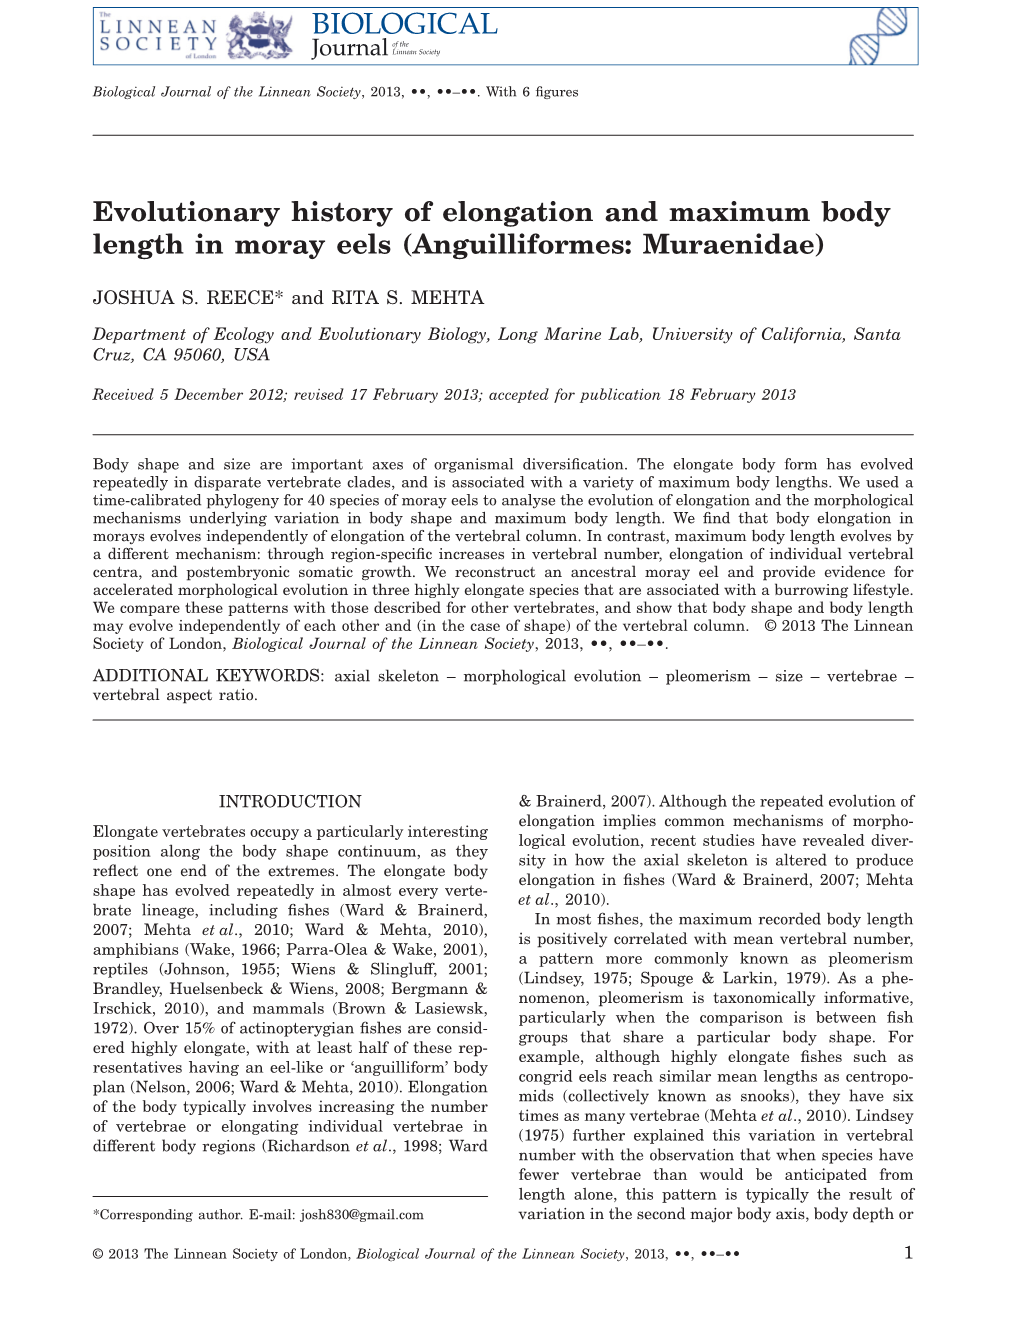 Evolutionary History of Elongation and Maximum Body Length in Moray Eels (Anguilliformes: Muraenidae)